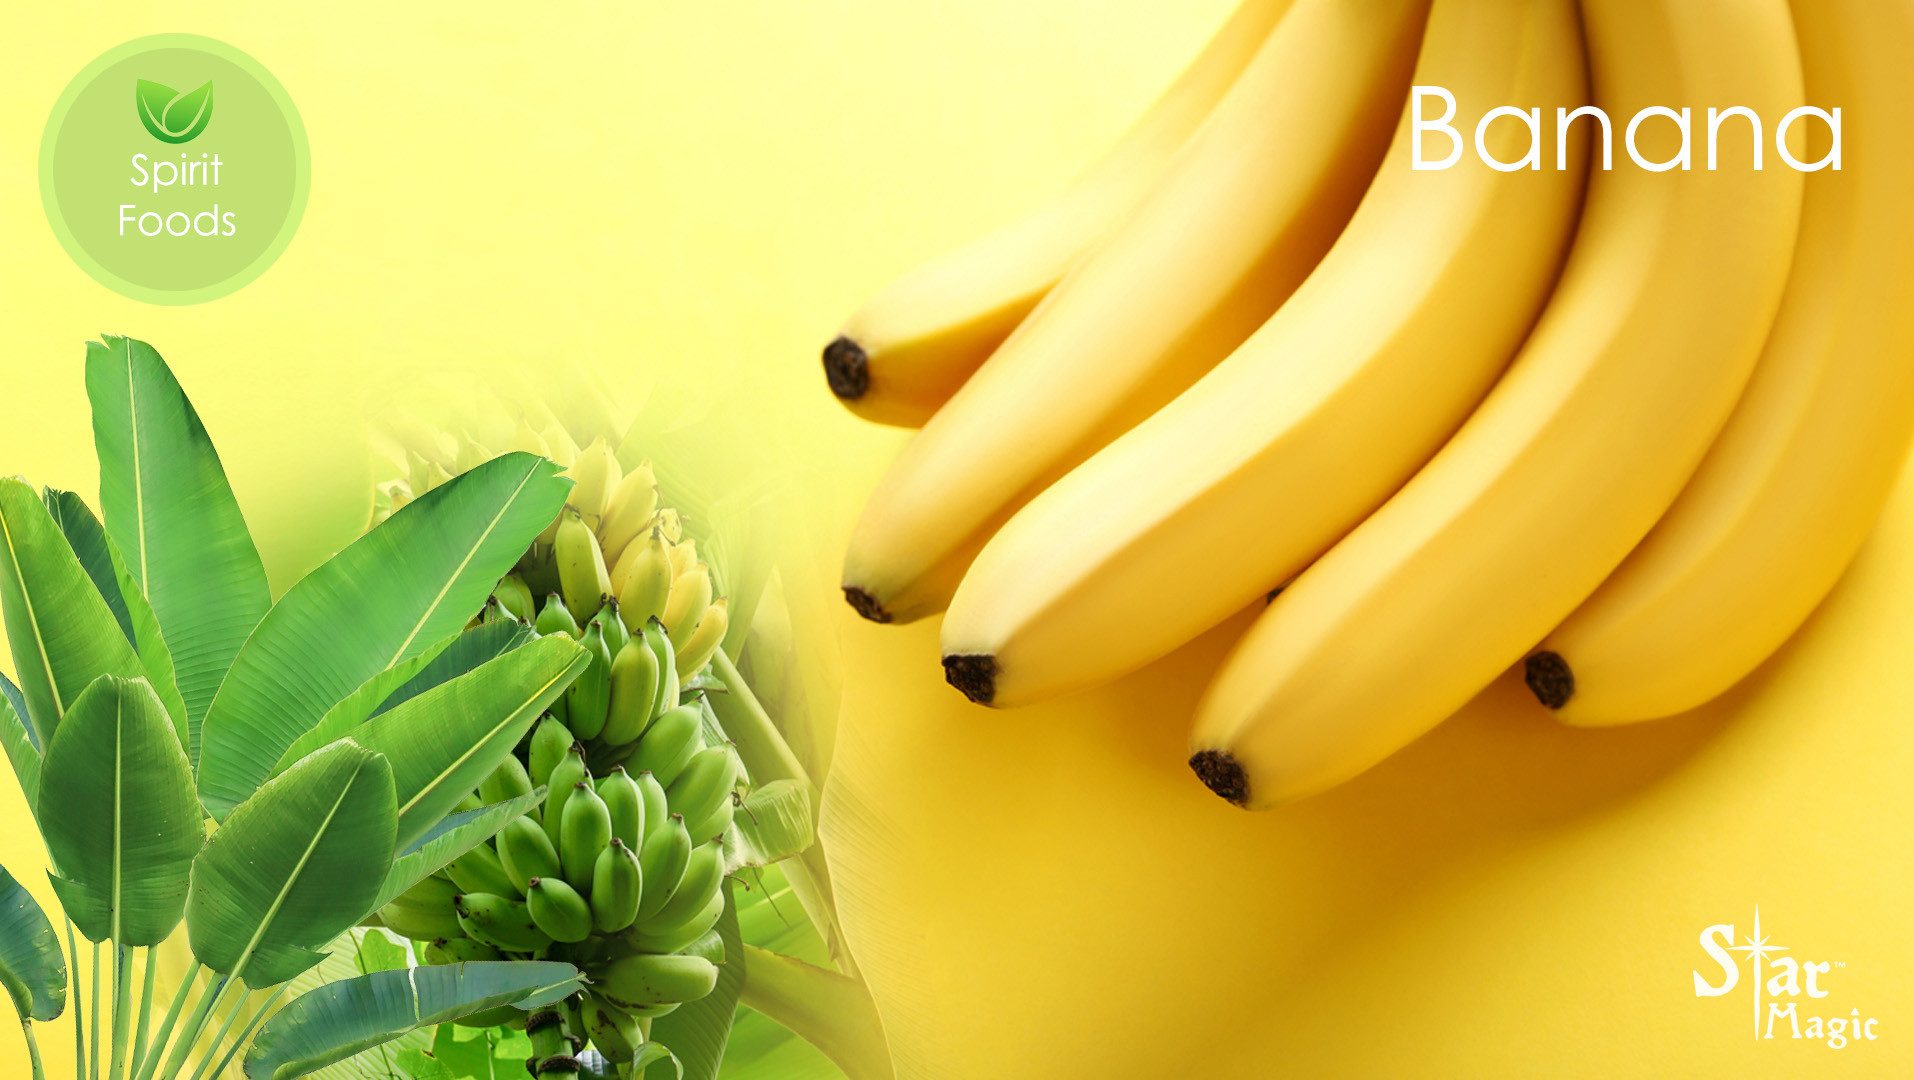 Spirit Food – Banana